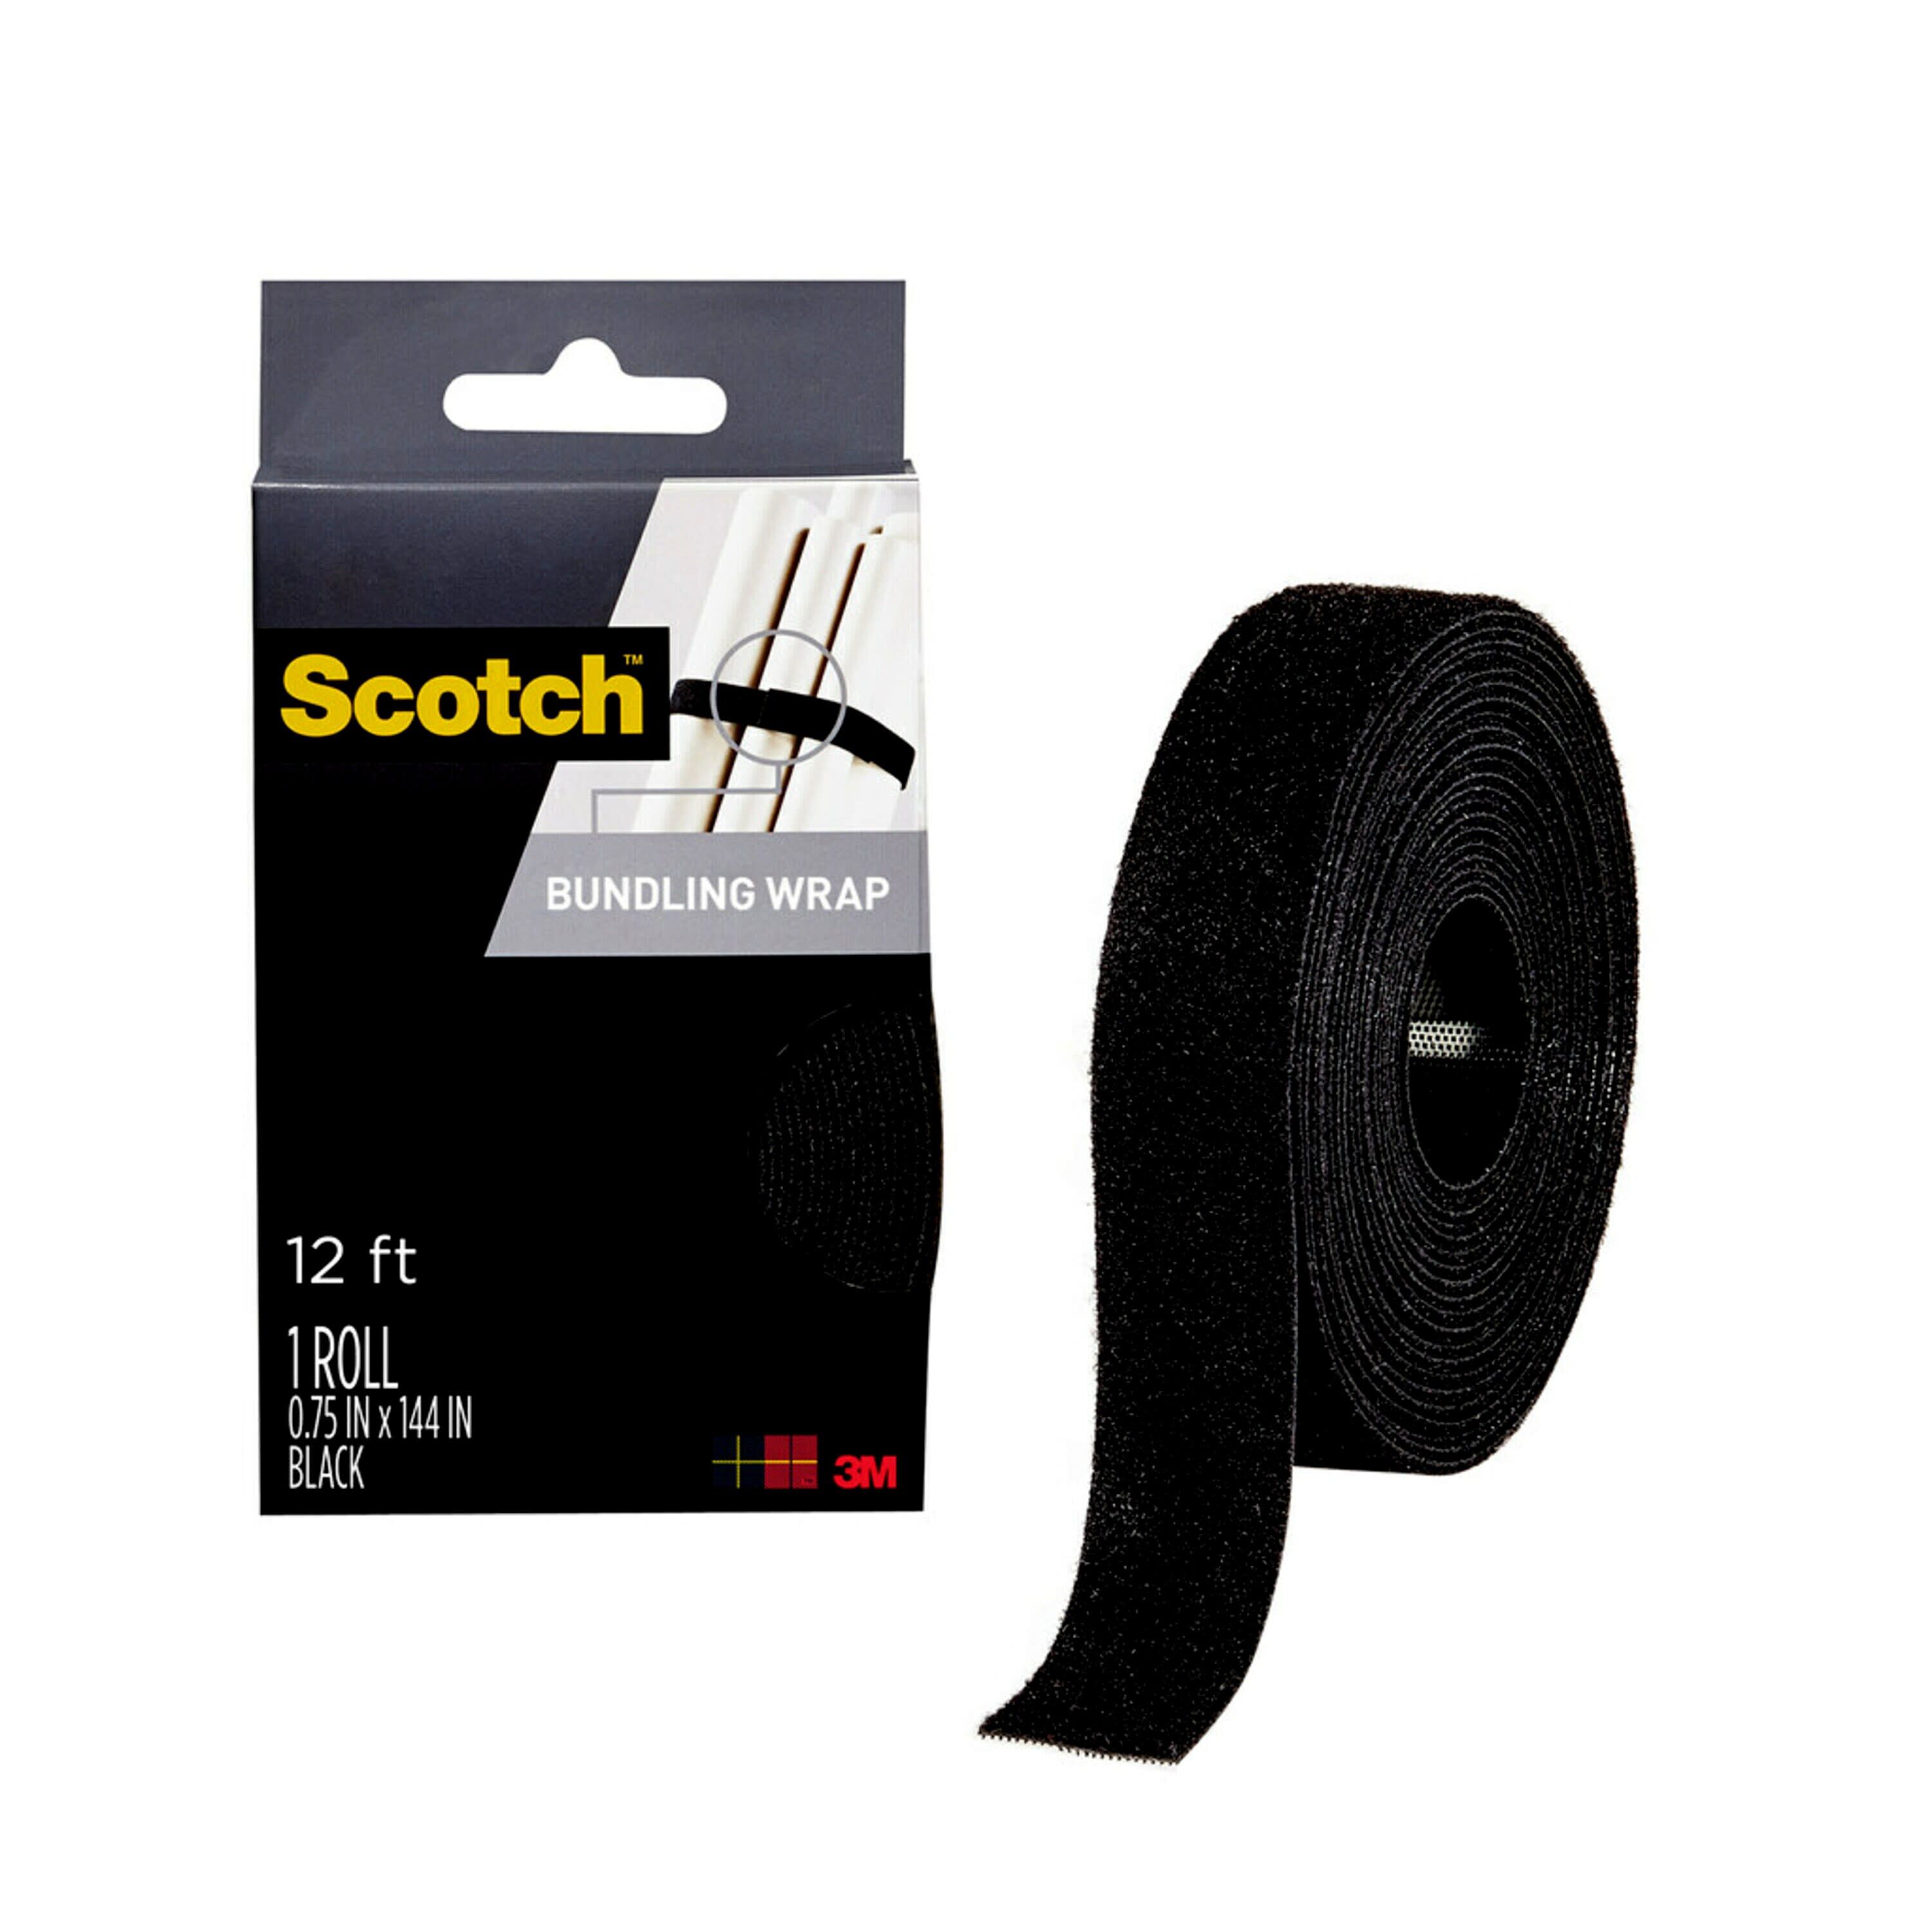 Scotch Bundling strap 144-in Black Hook and Loop Fastener in the Specialty  Fasteners & Fastener Kits department at